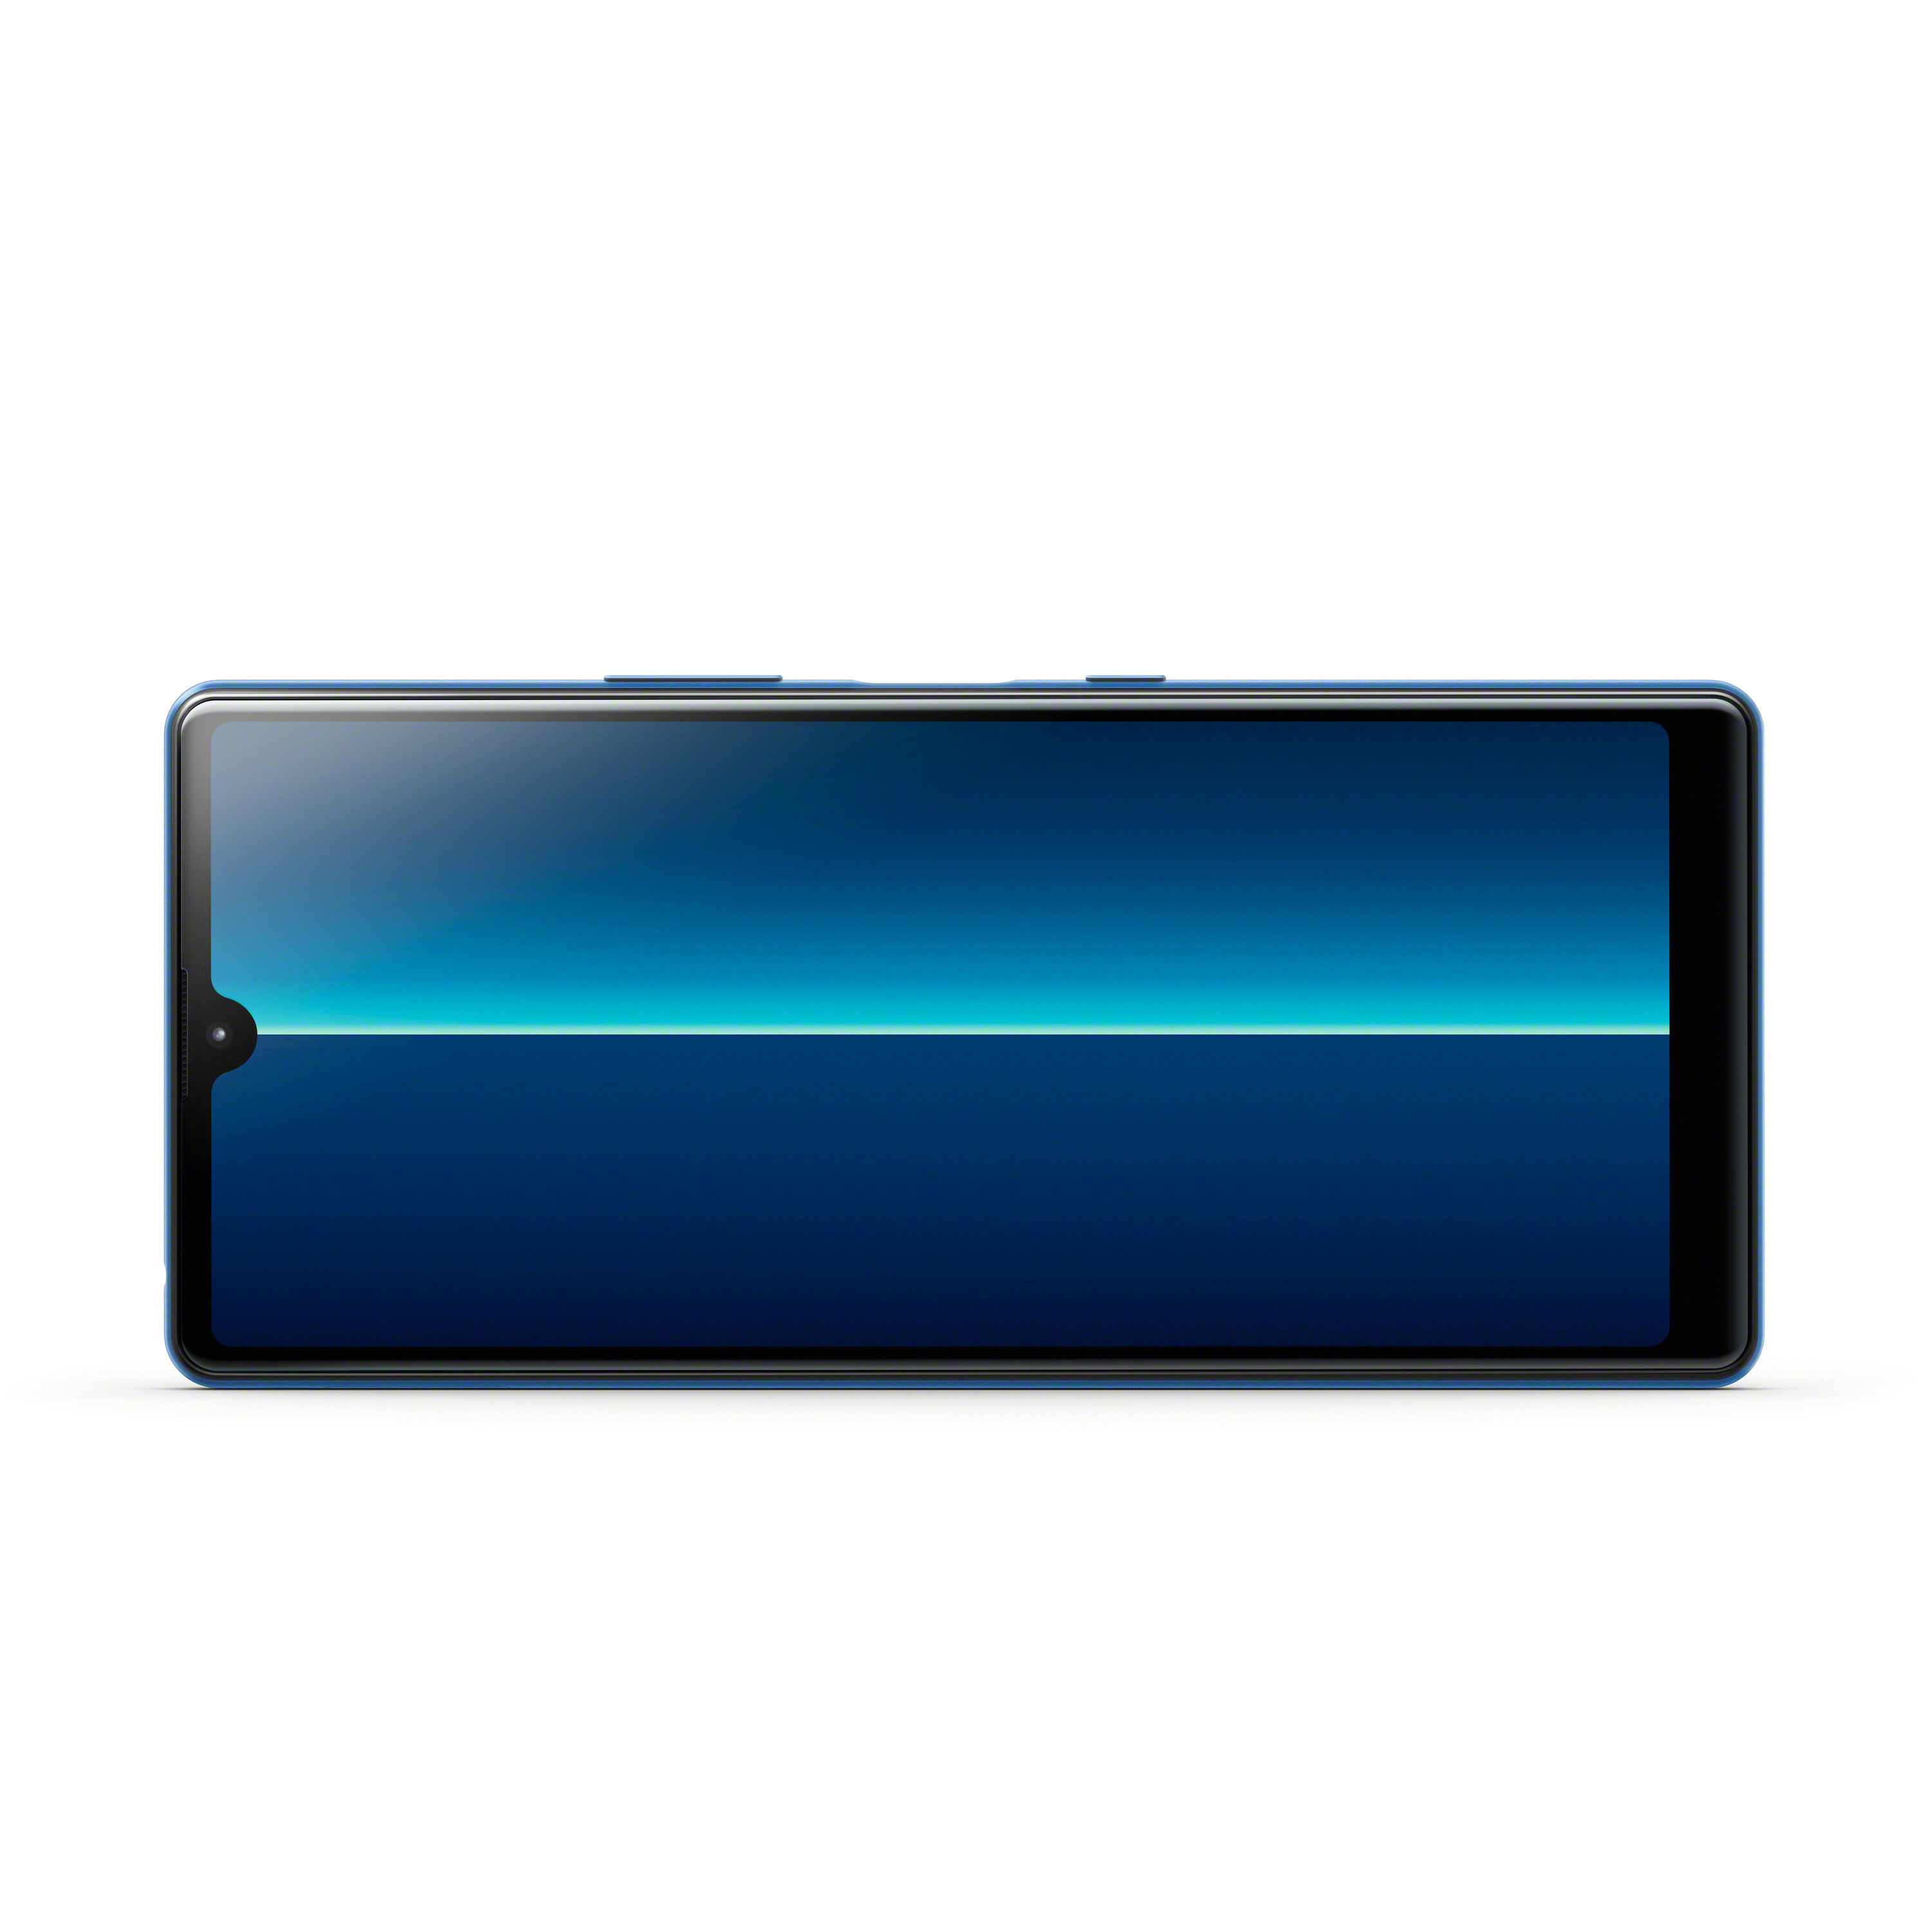 L4 SONY Xperia Display 21:9 Dual SIM 64 GB Blau